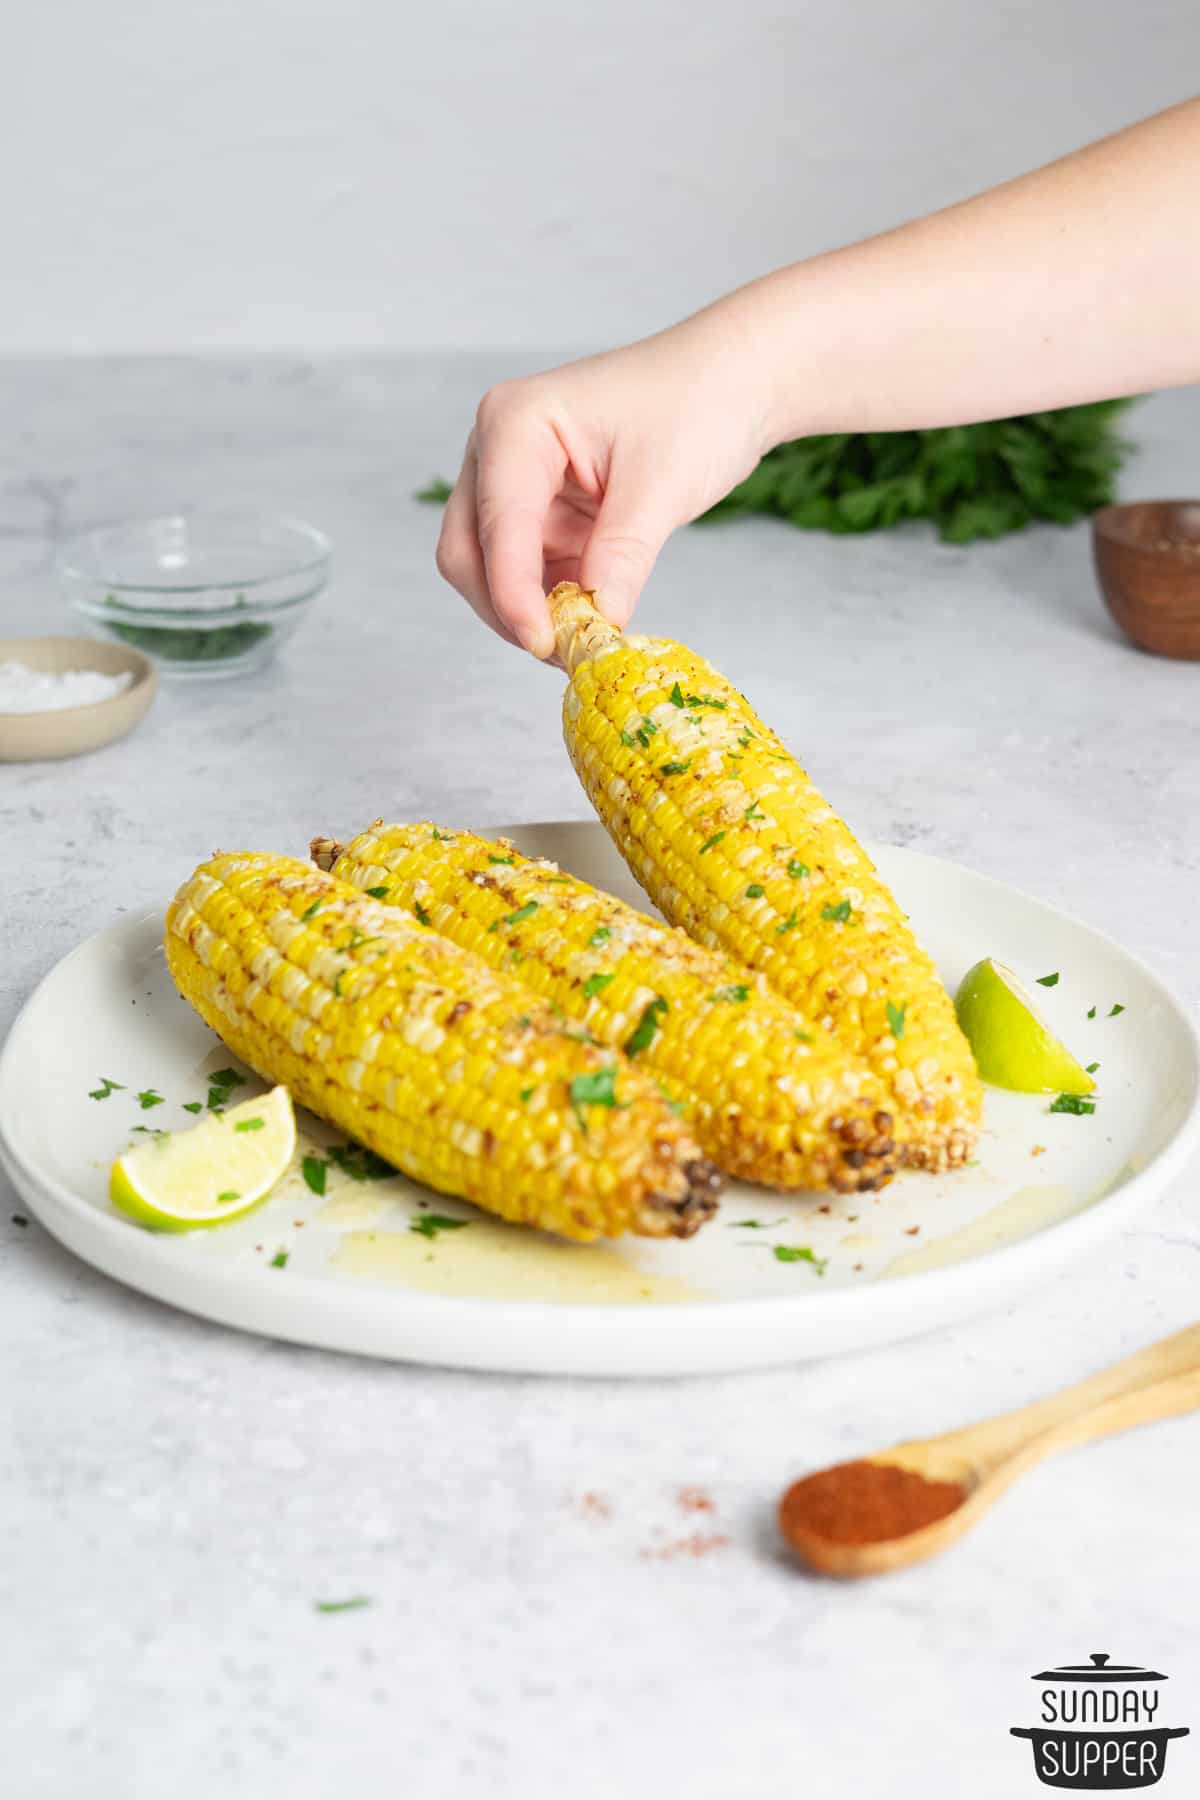 a hand picking up an ear of corn off a plate